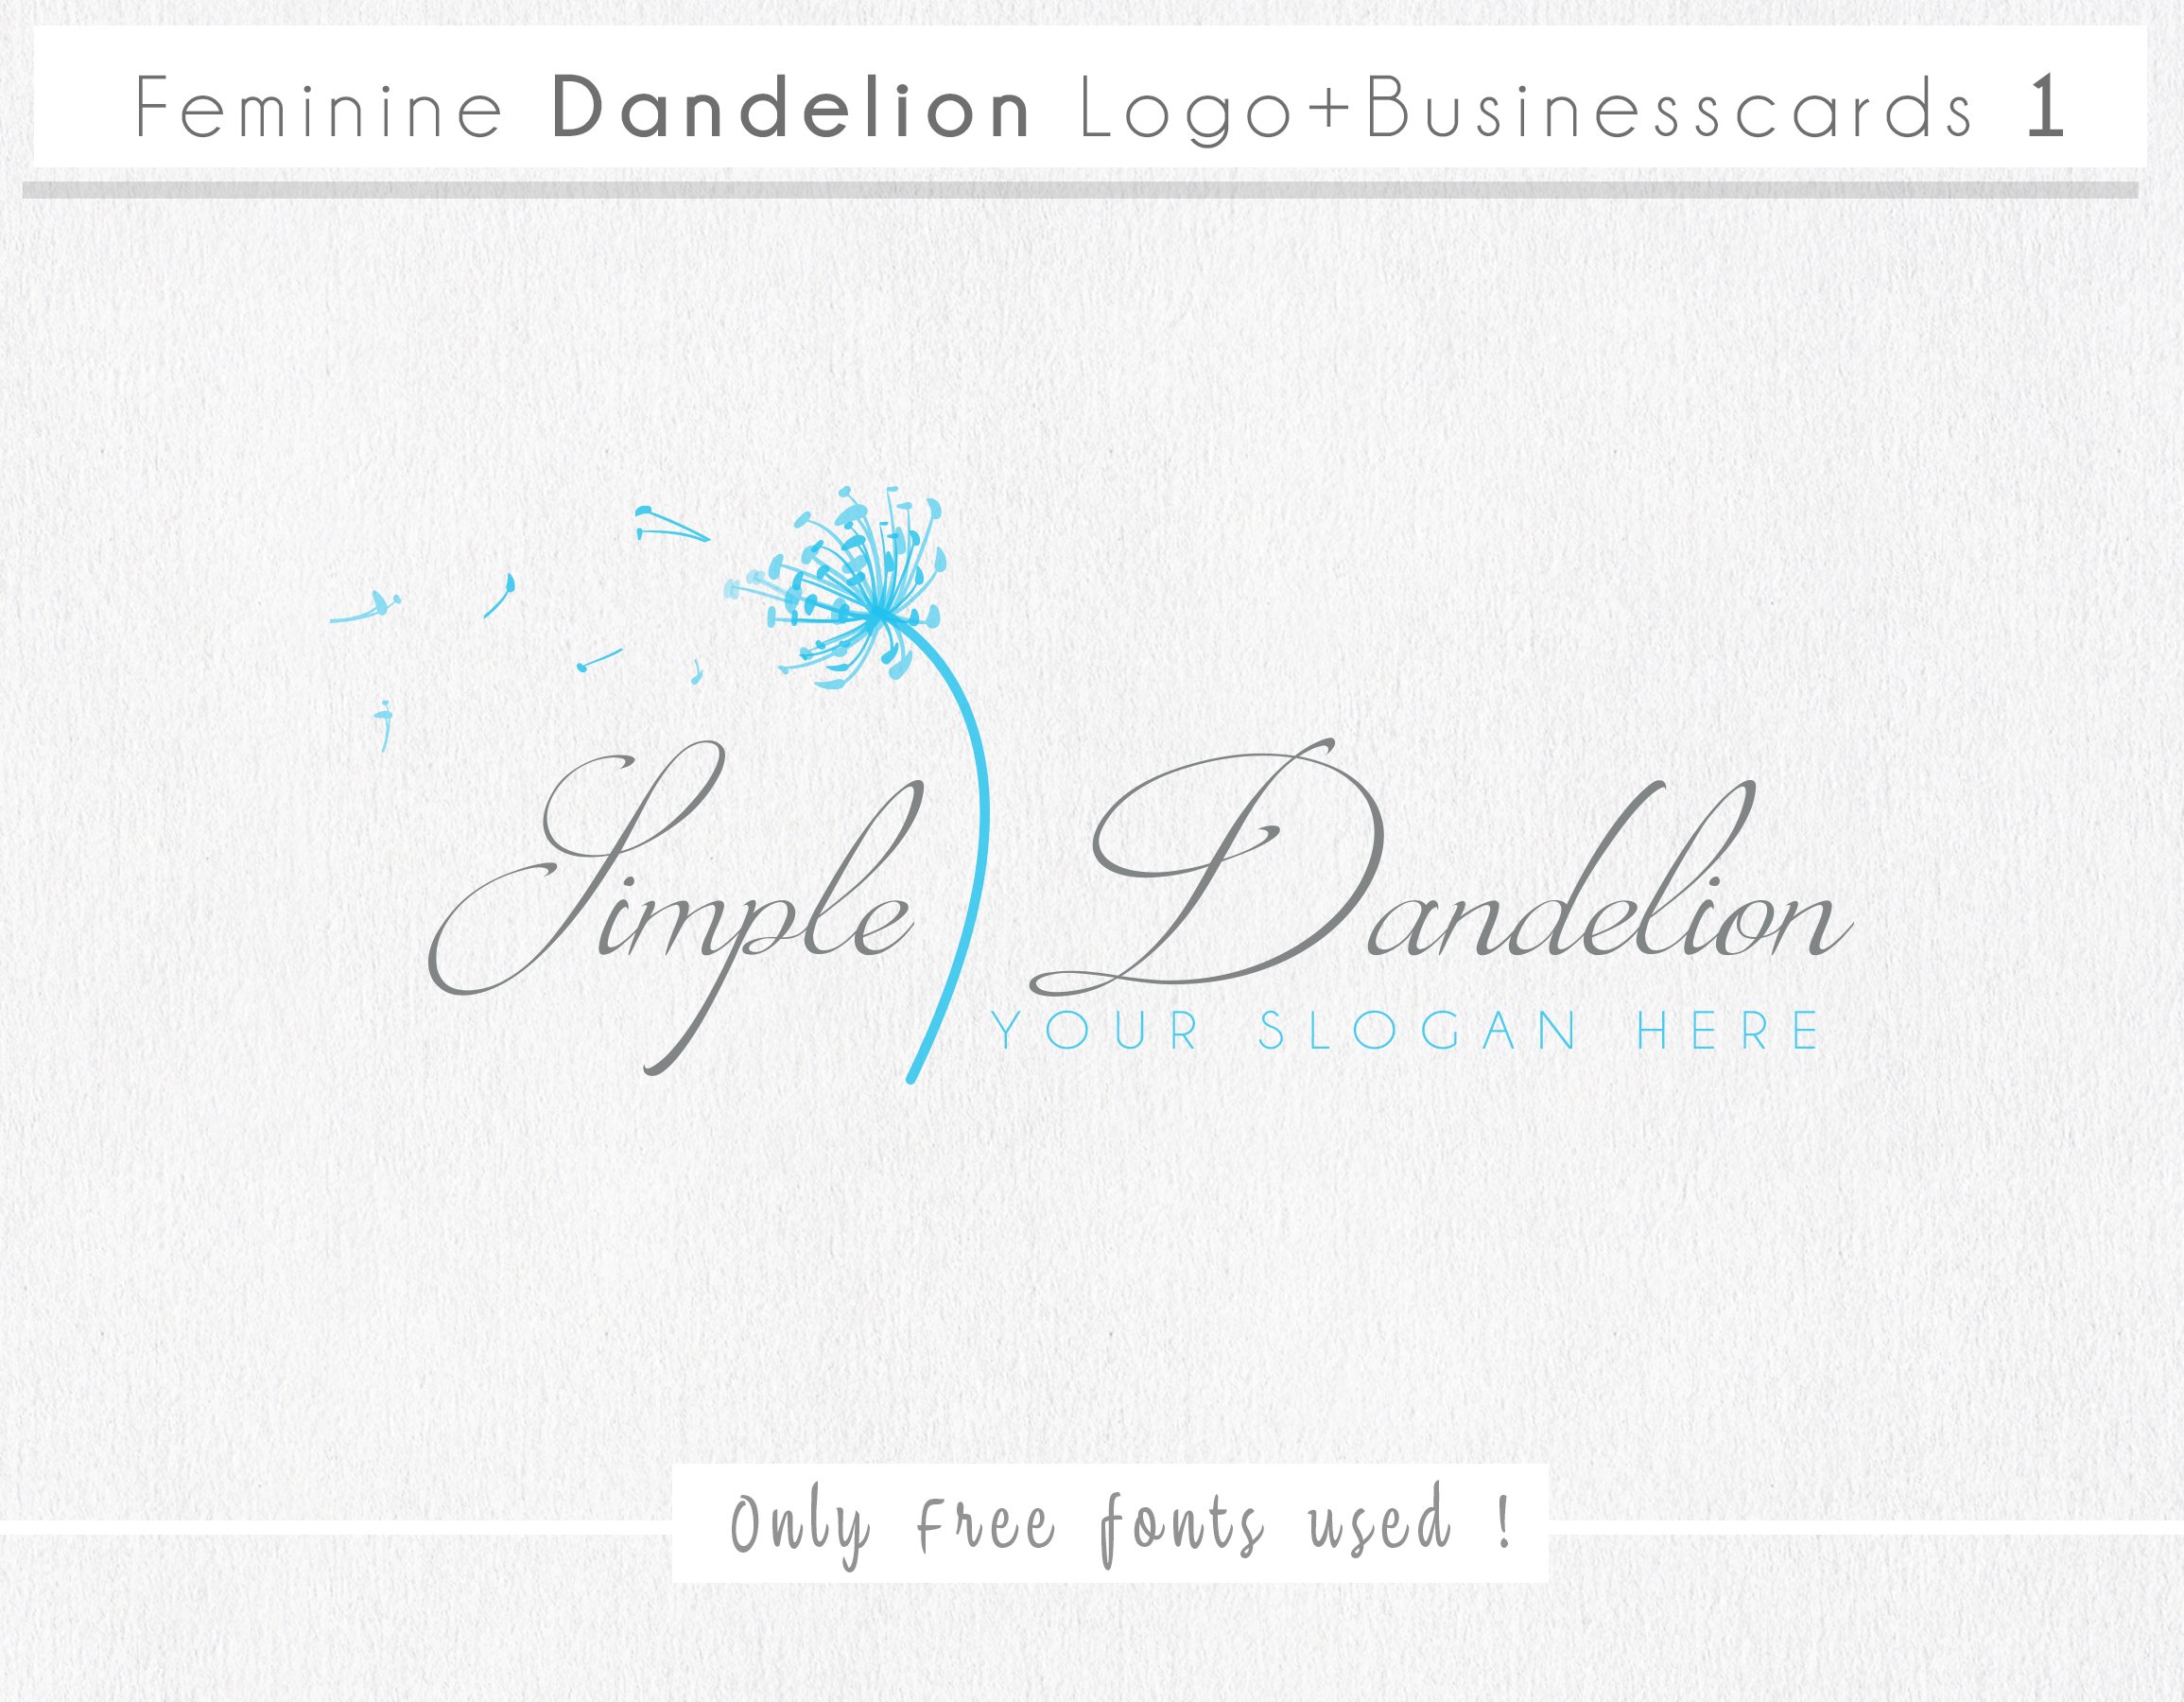 Feminine Dandelion logo businesscard cover image.